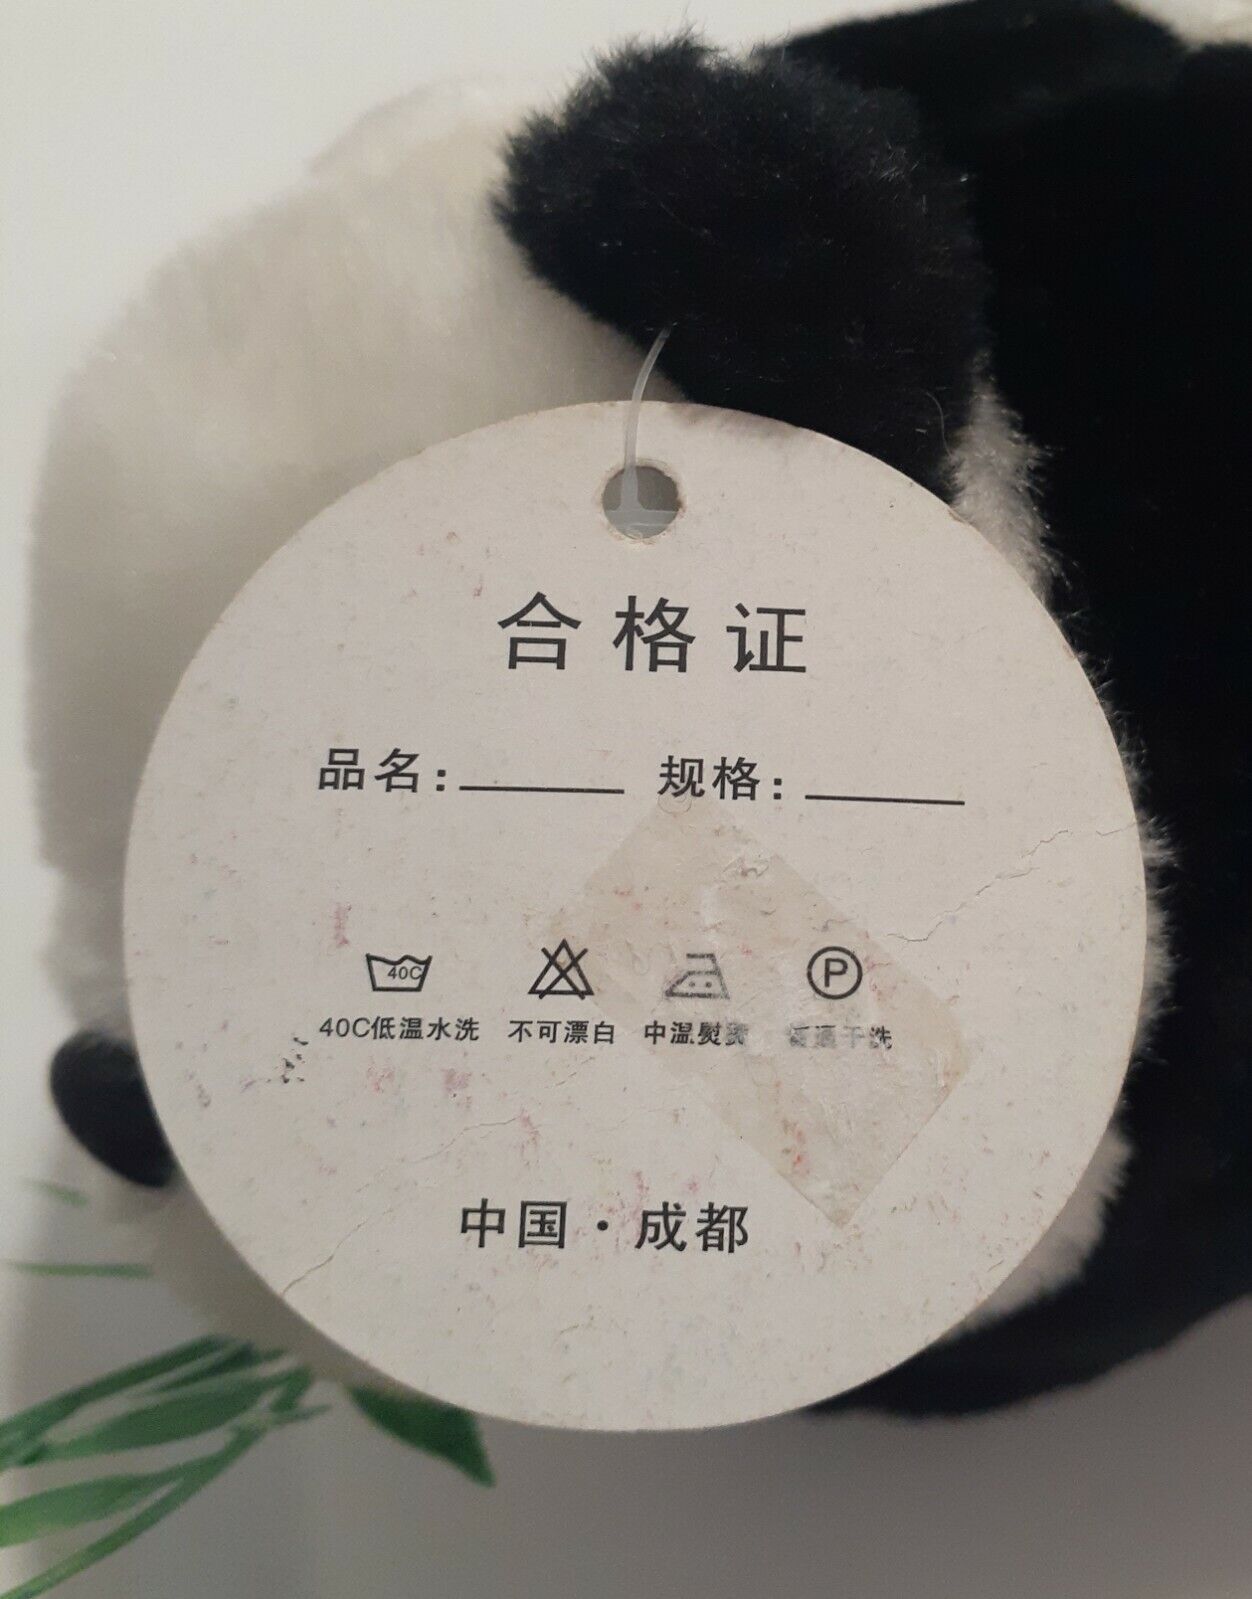 🐼Panda Bear Plush 7" long,🐼 From China